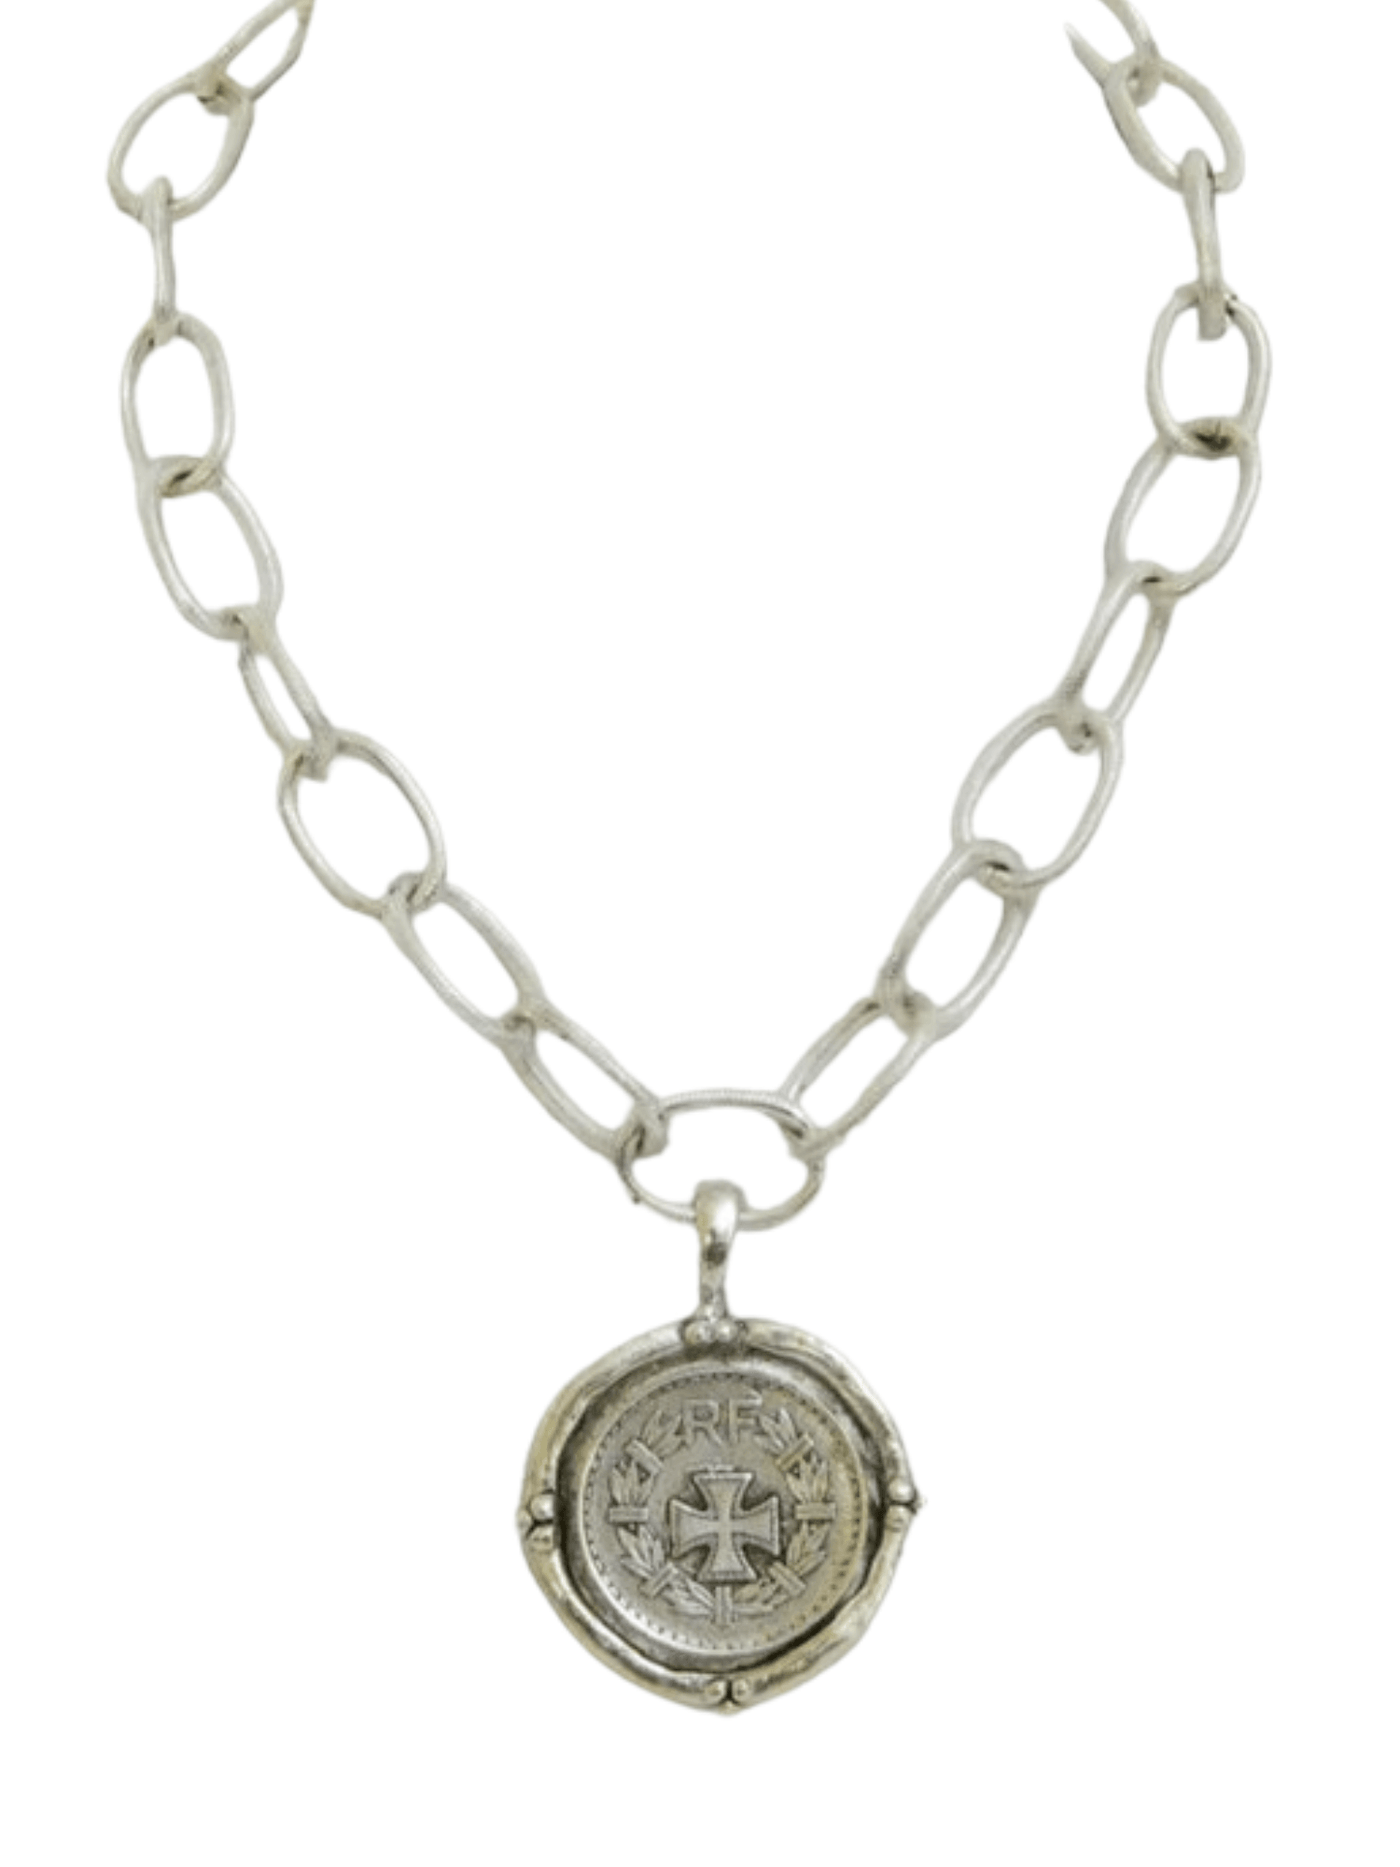 Handcast Silver Cross Necklace | Susan Shaw